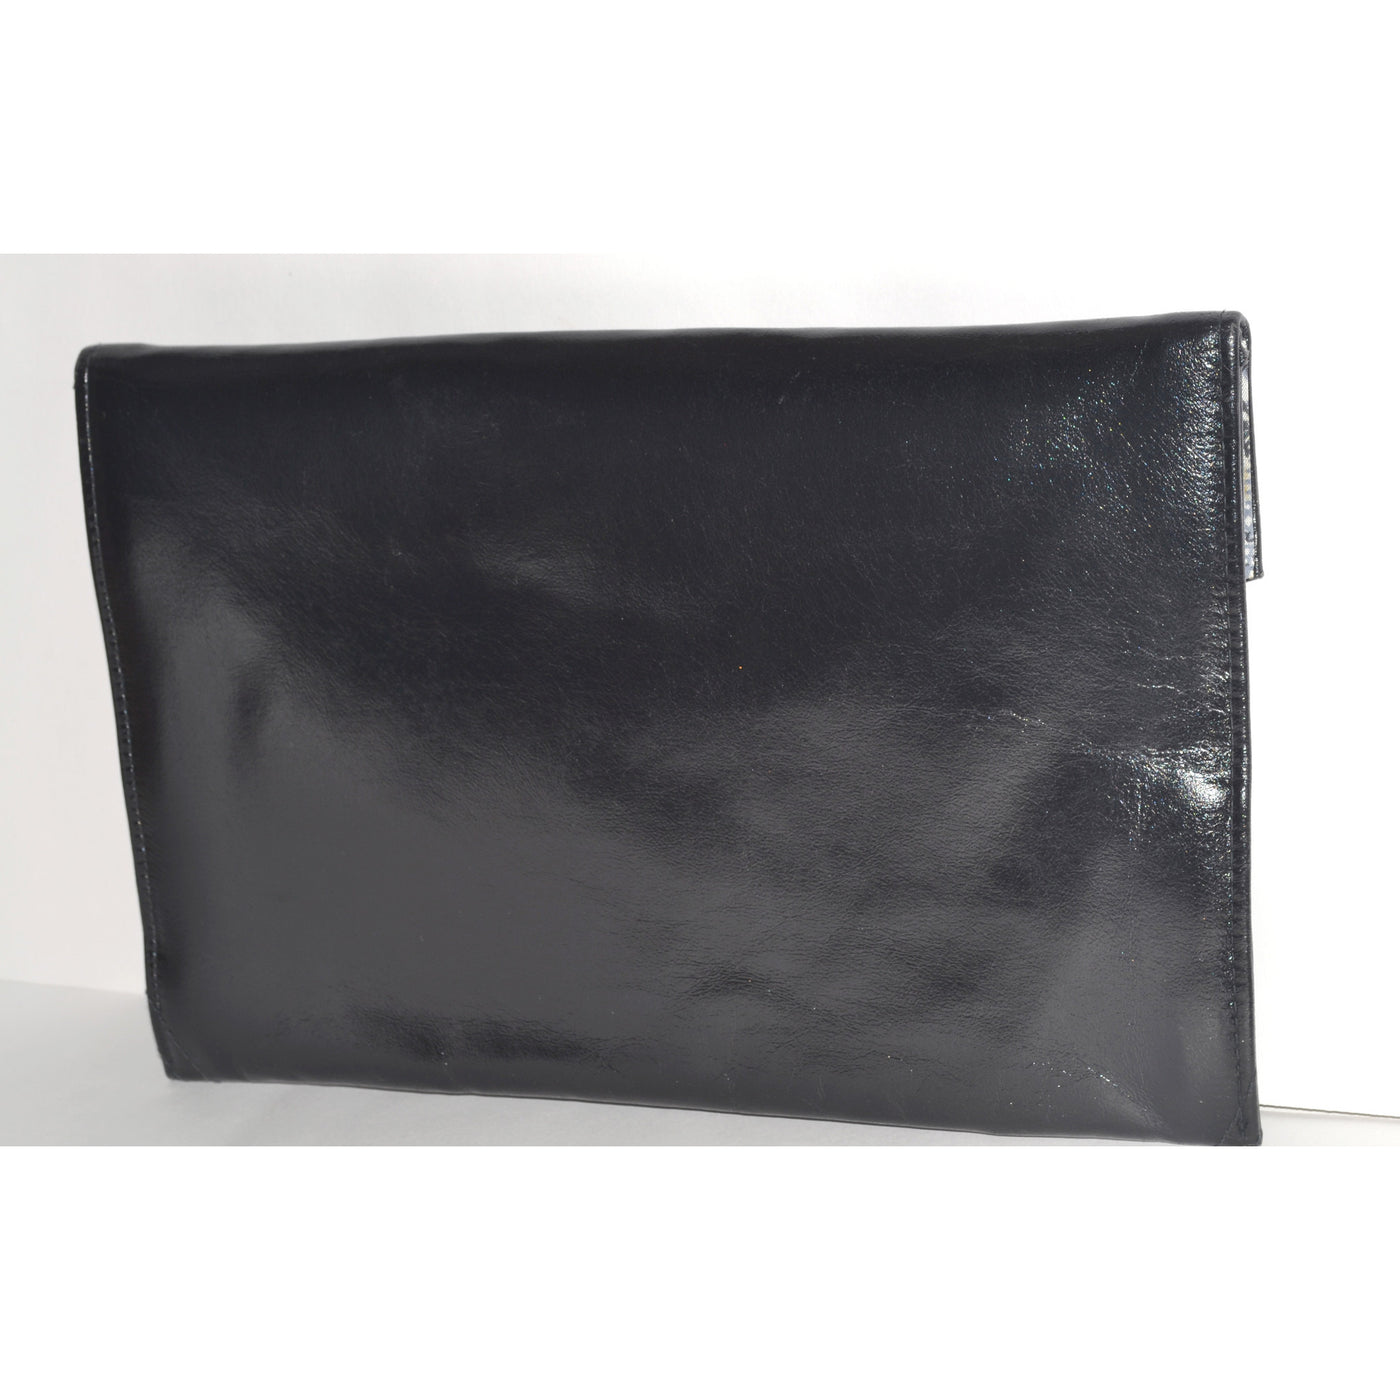 Vintage Black Envelope Clutch Purse By Lord & Taylor 